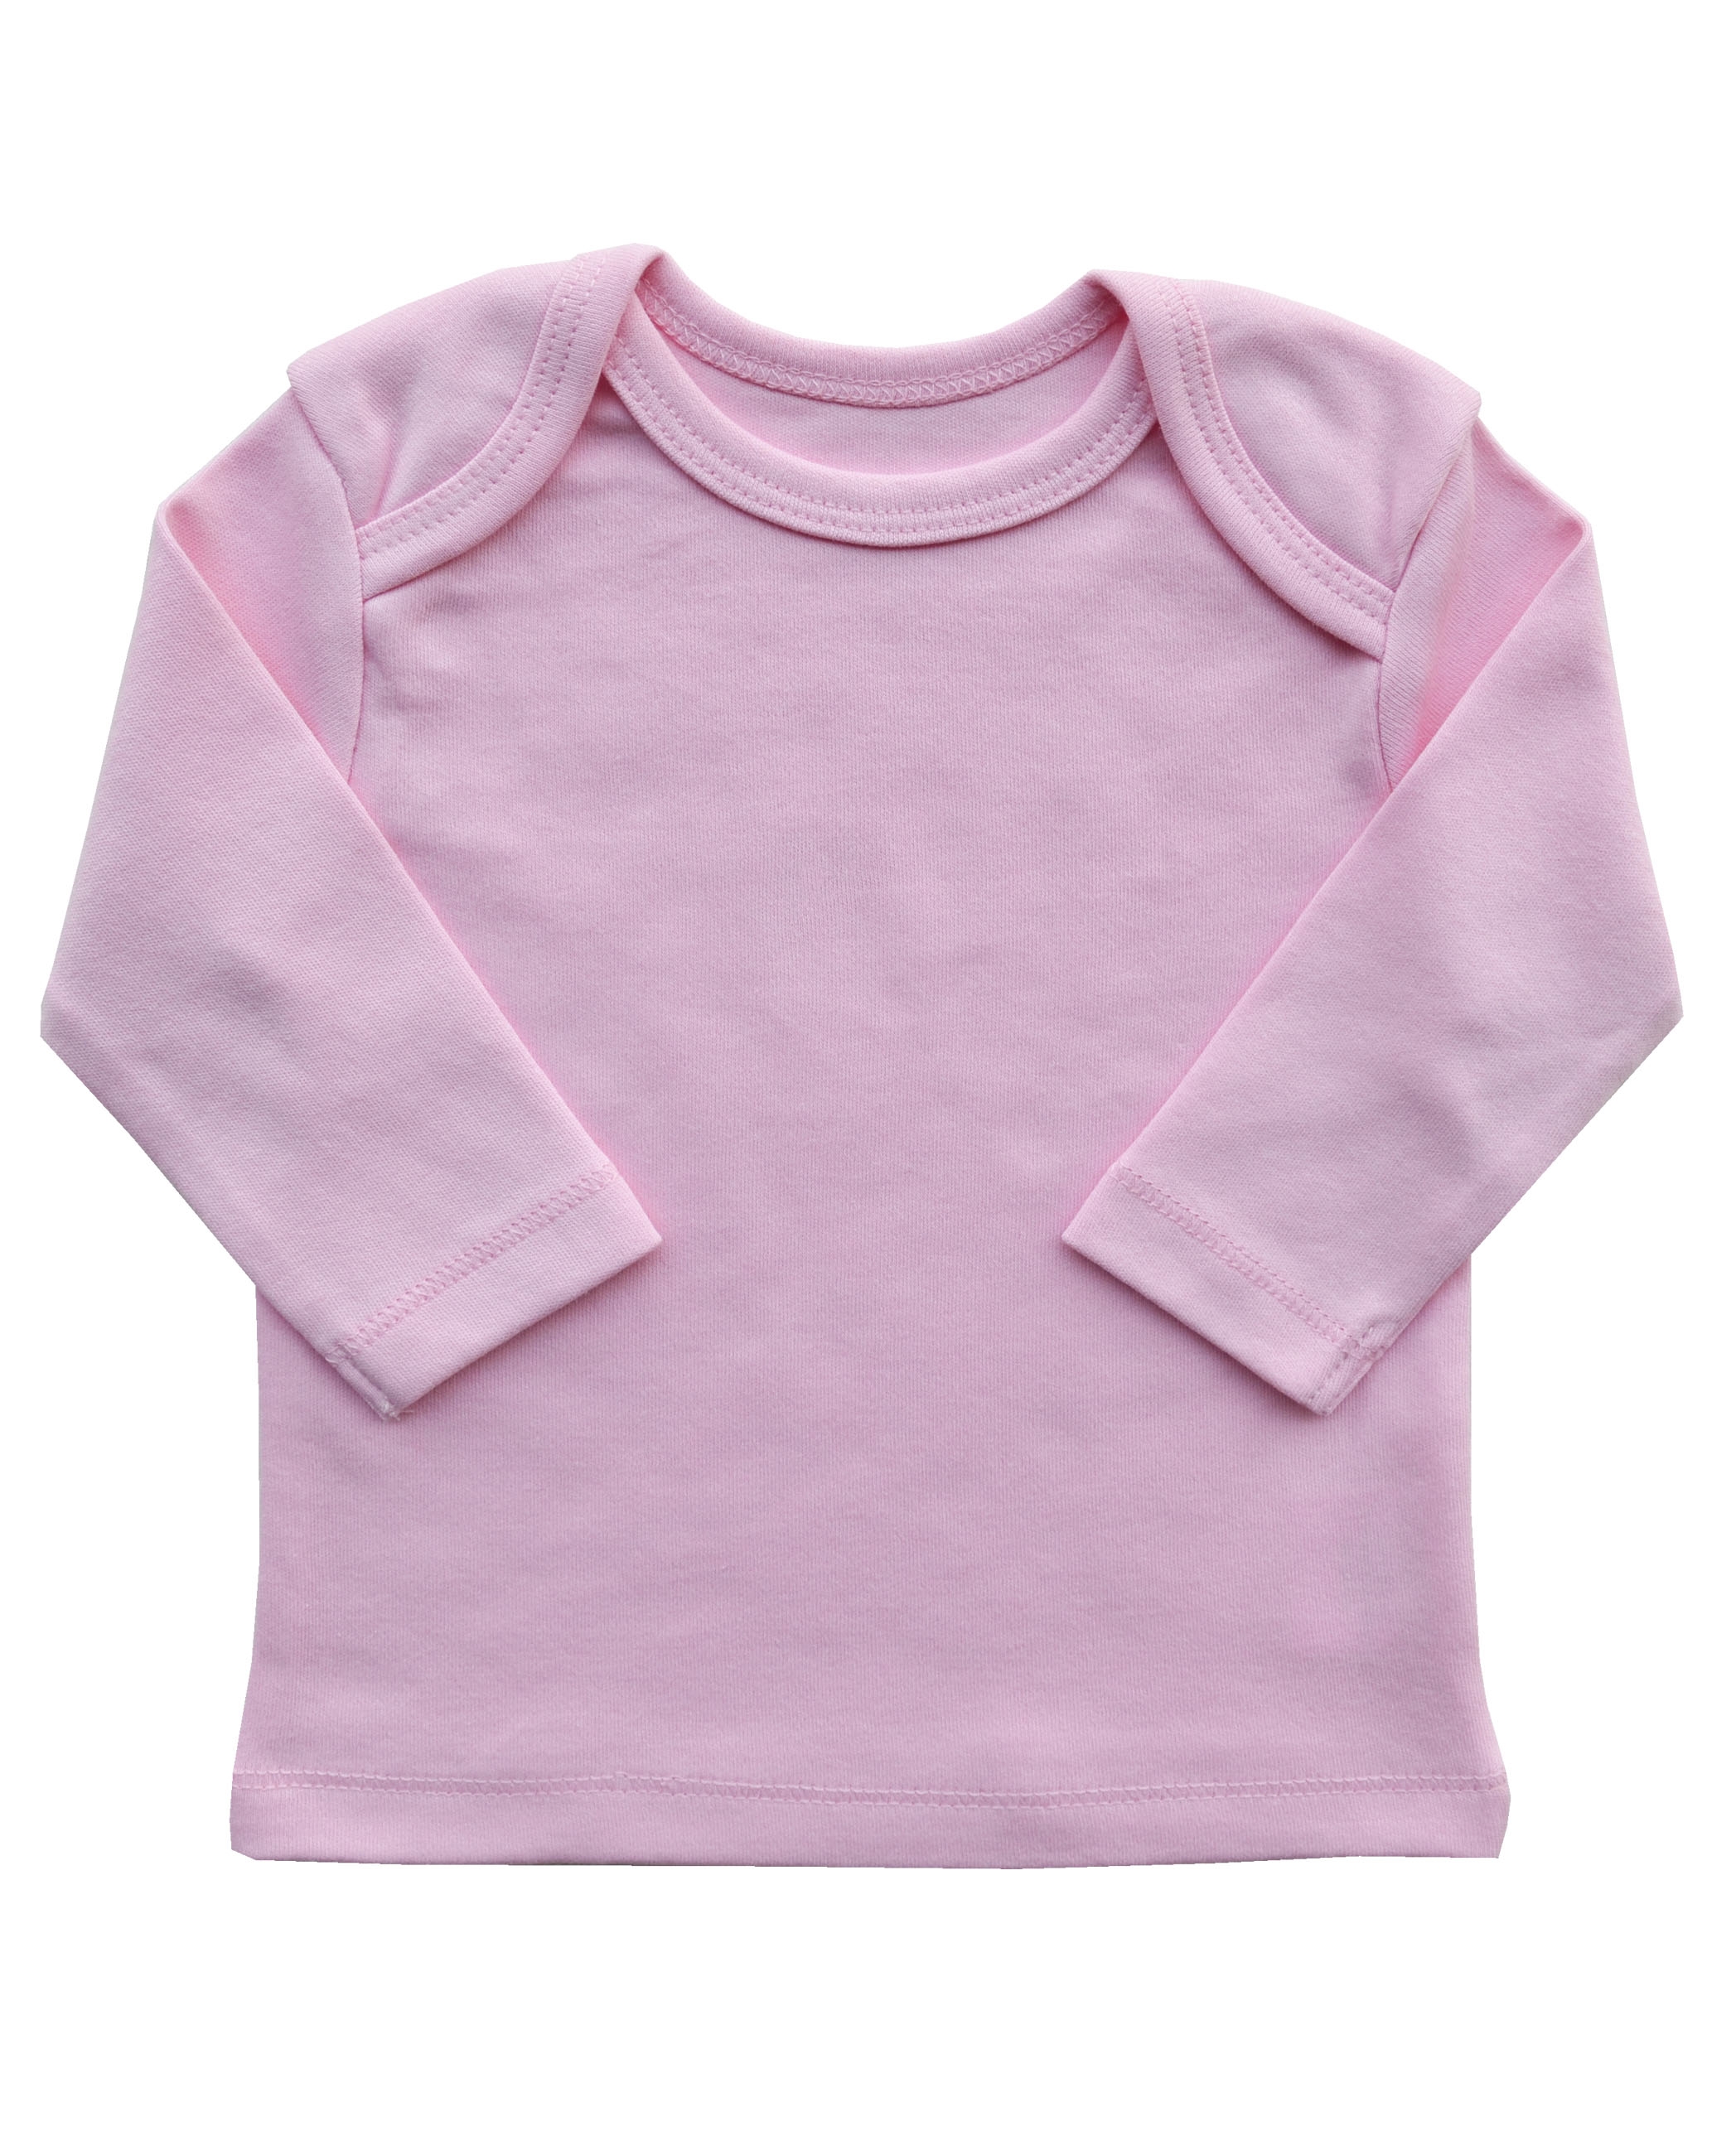 Pink Long Sleeve Top (100% Cotton Interlock Biowash)